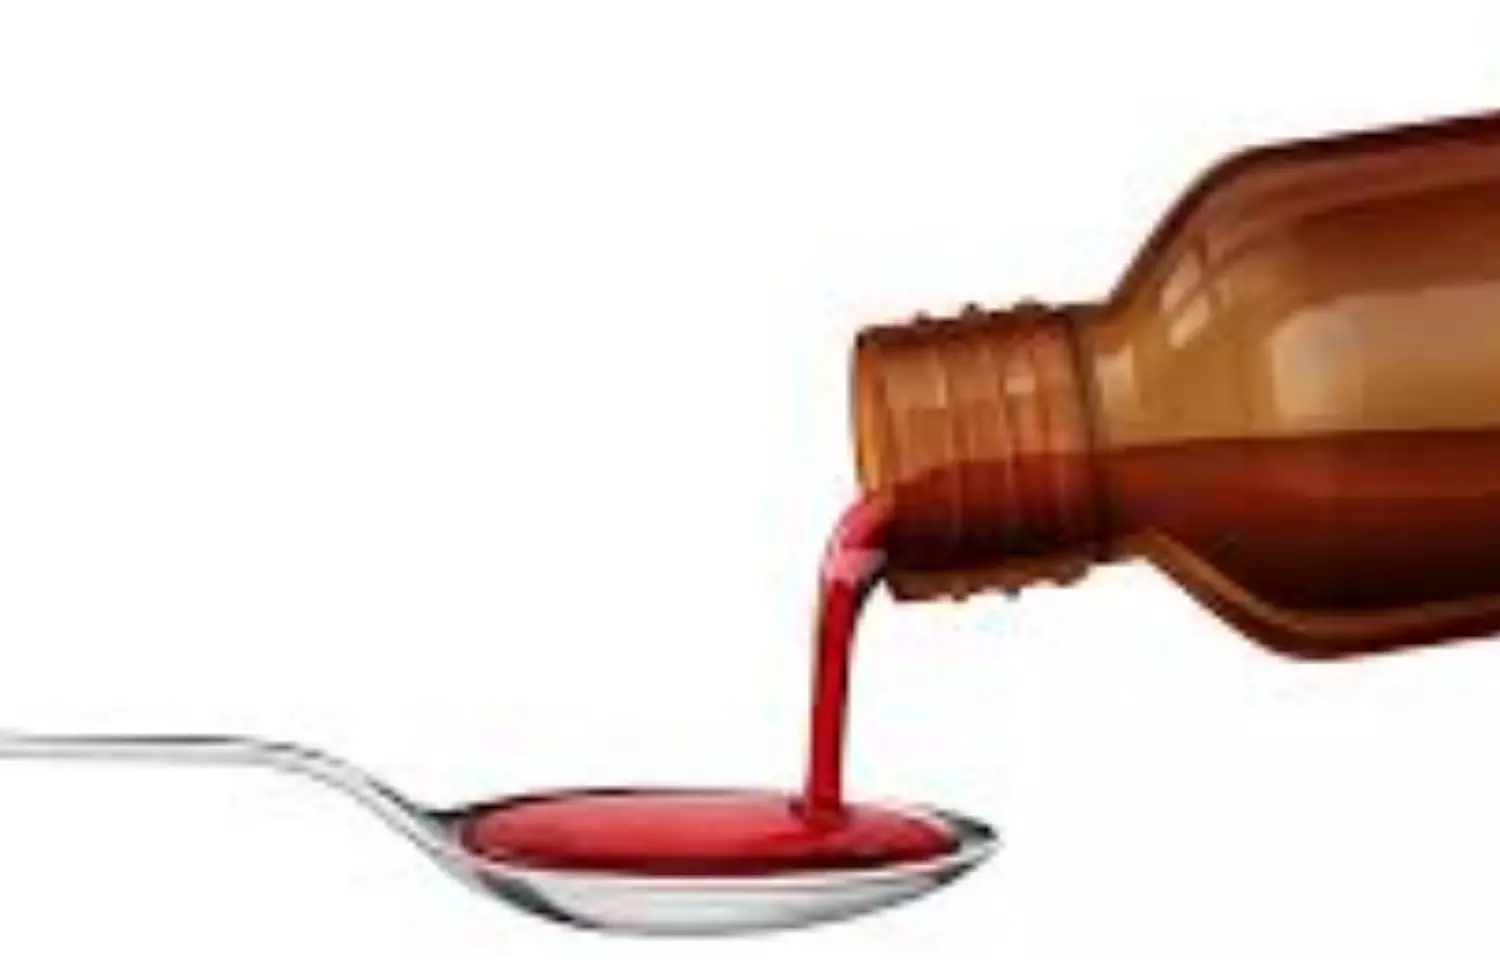 UP caps sale of codeine-based cough syrup, Tramadol based pain killer, Details